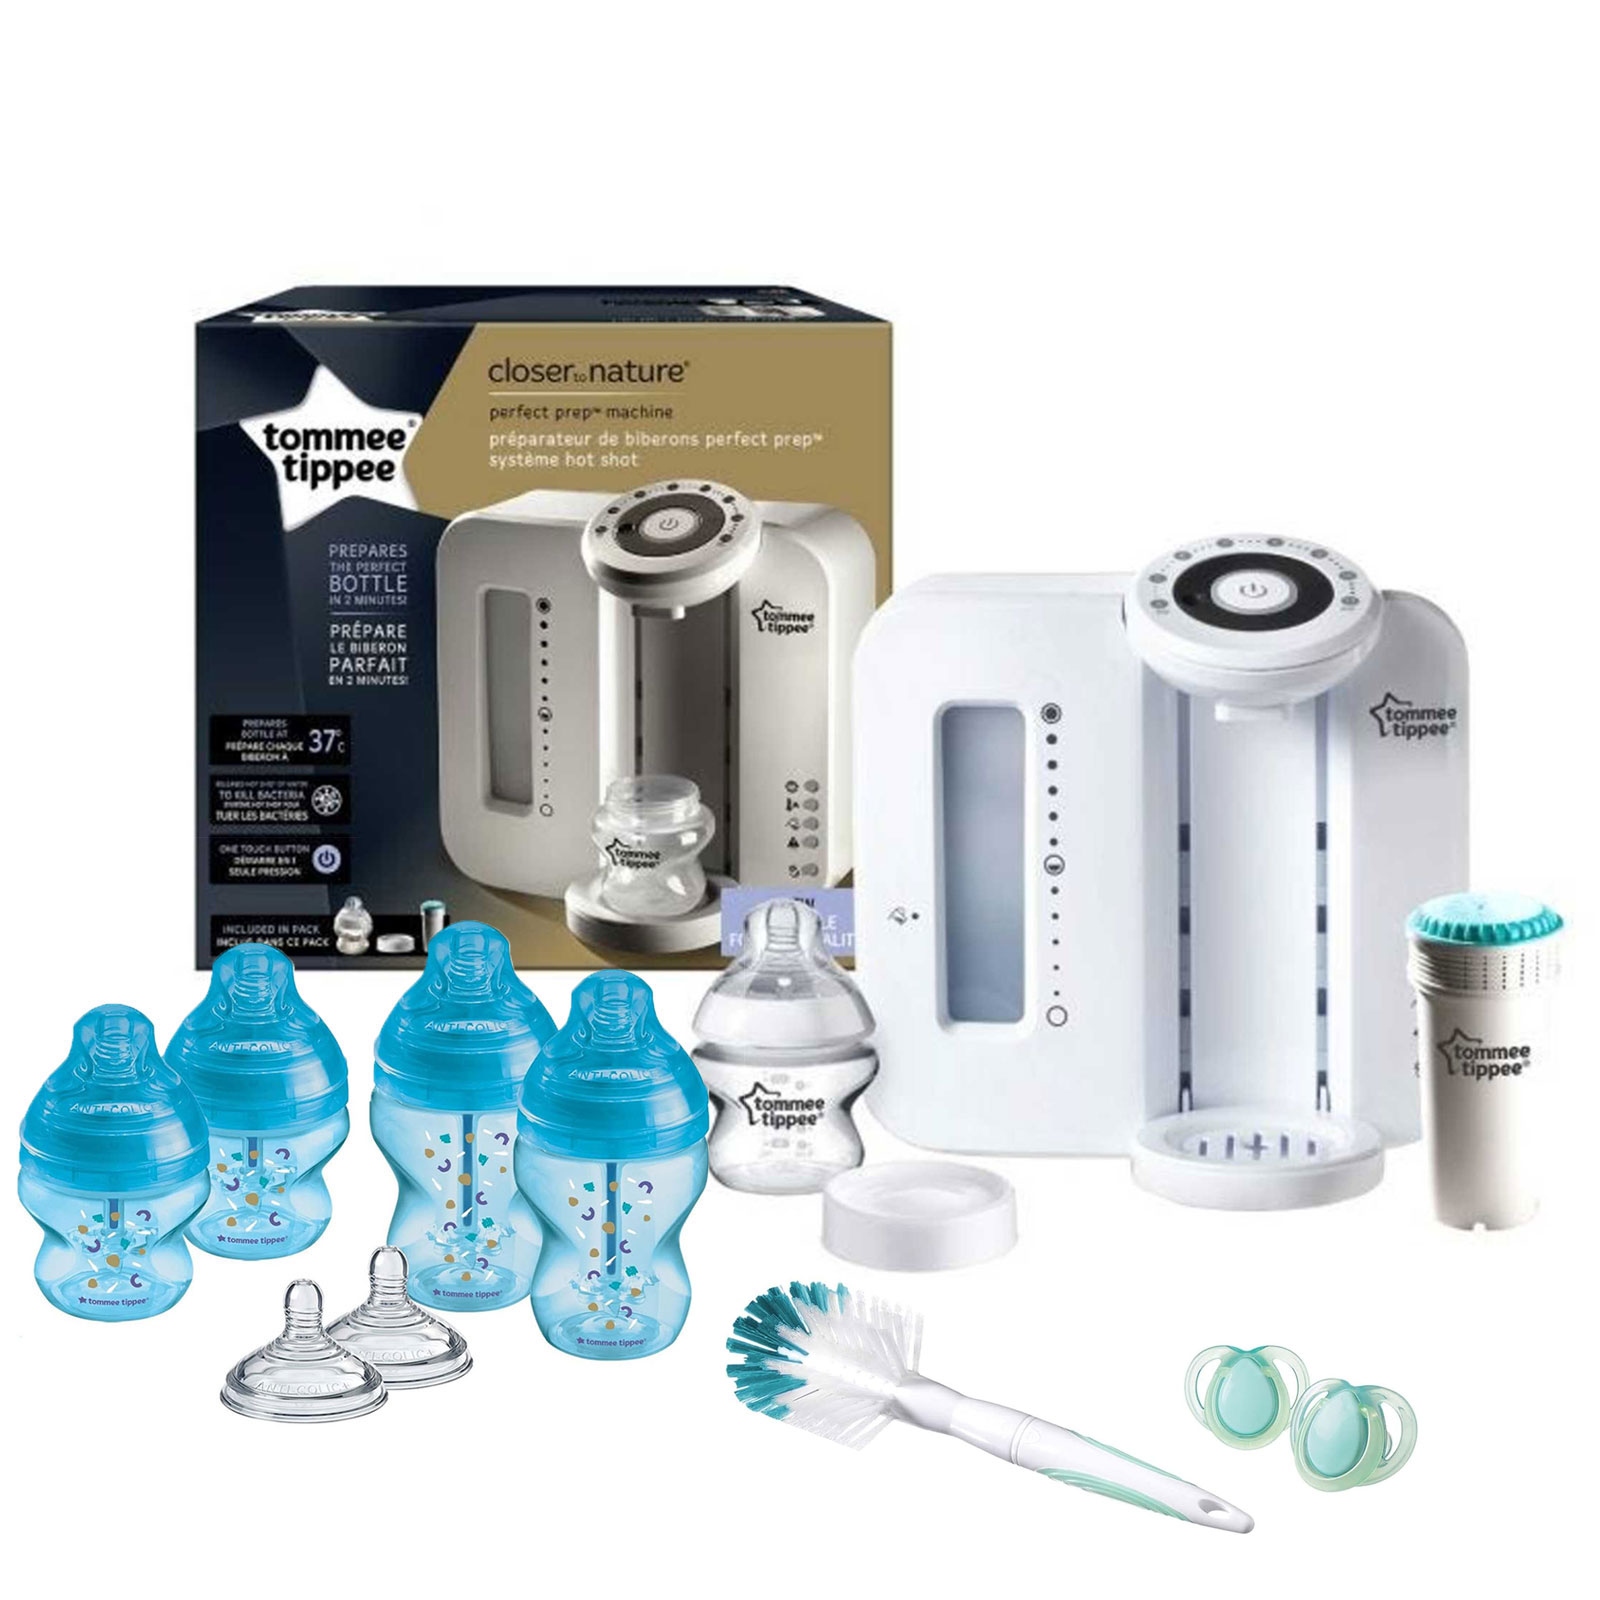 Tommee Tippee 11pc Perfect Prep Machine Anti-Colic Baby Bottle Feeding Bundle - White / Blue